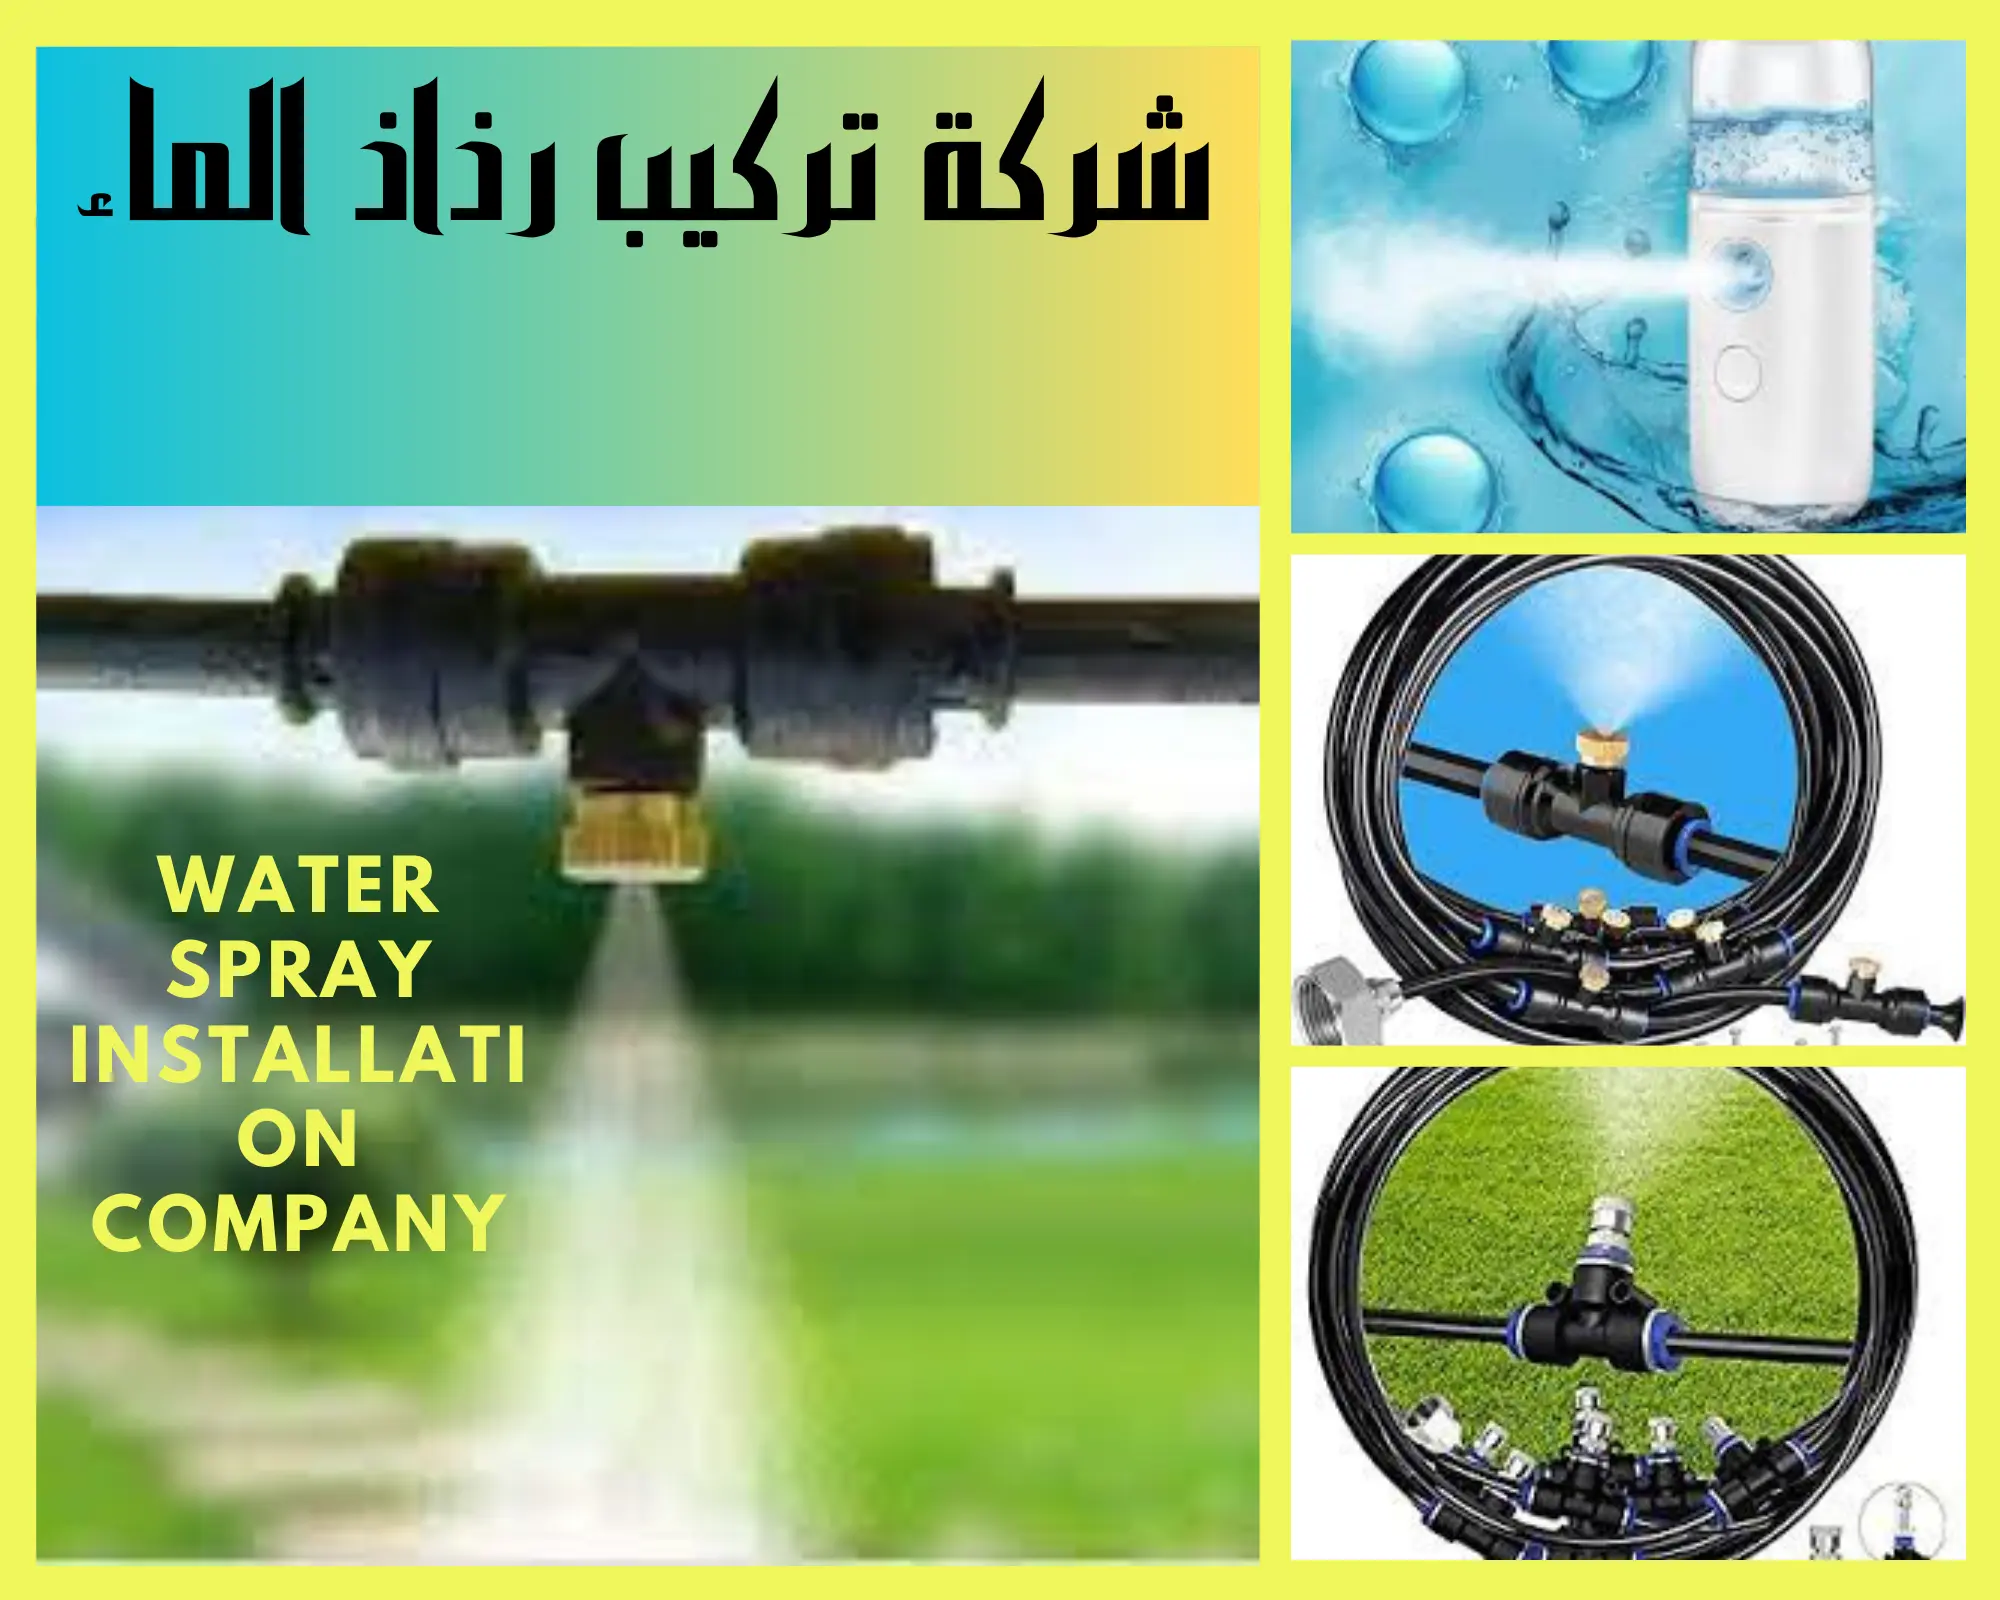 Water spray installation company